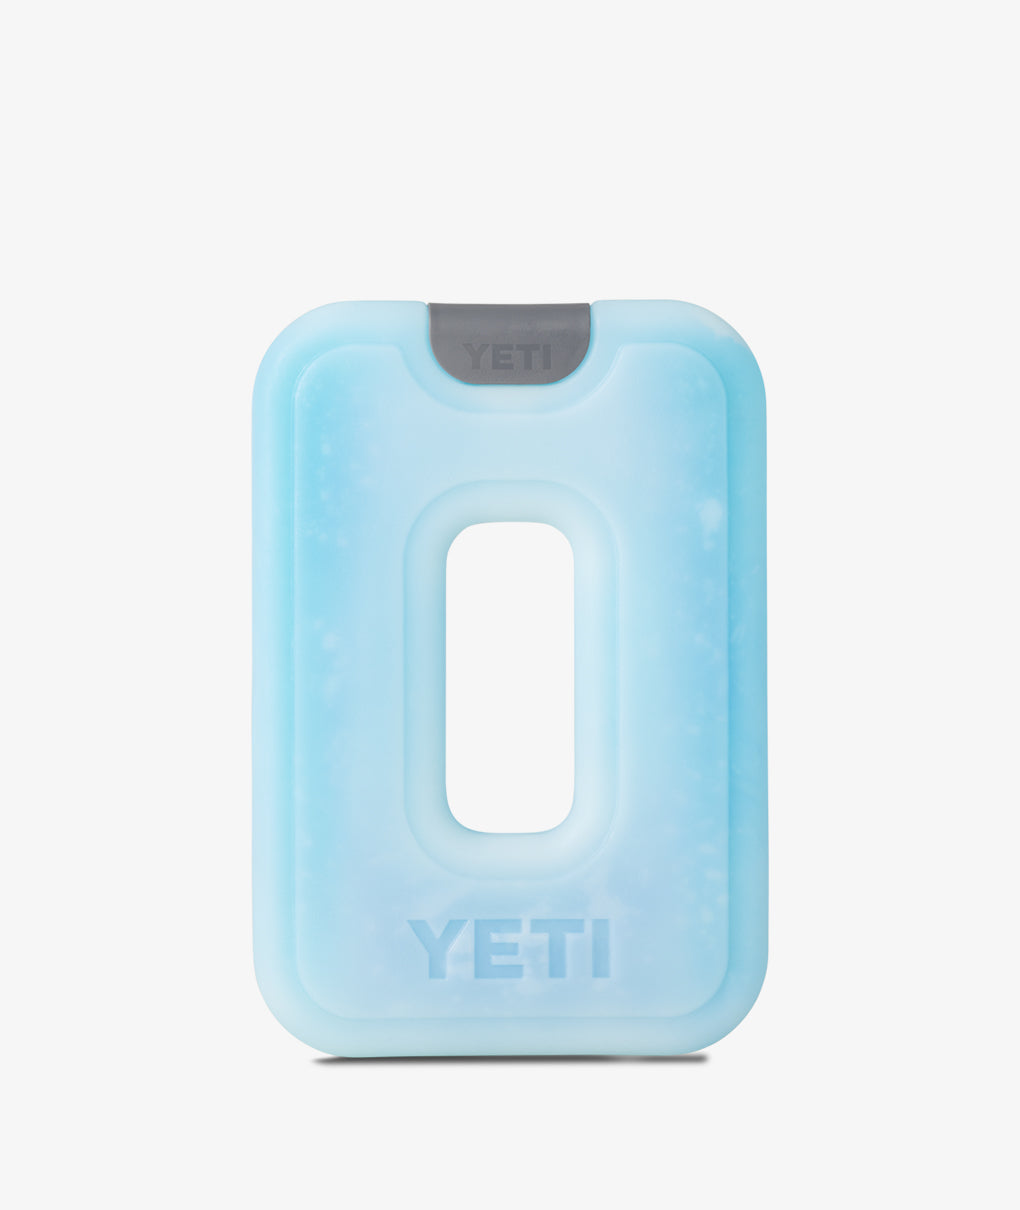 'YETI' Thin Ice Large - 4 lbs.